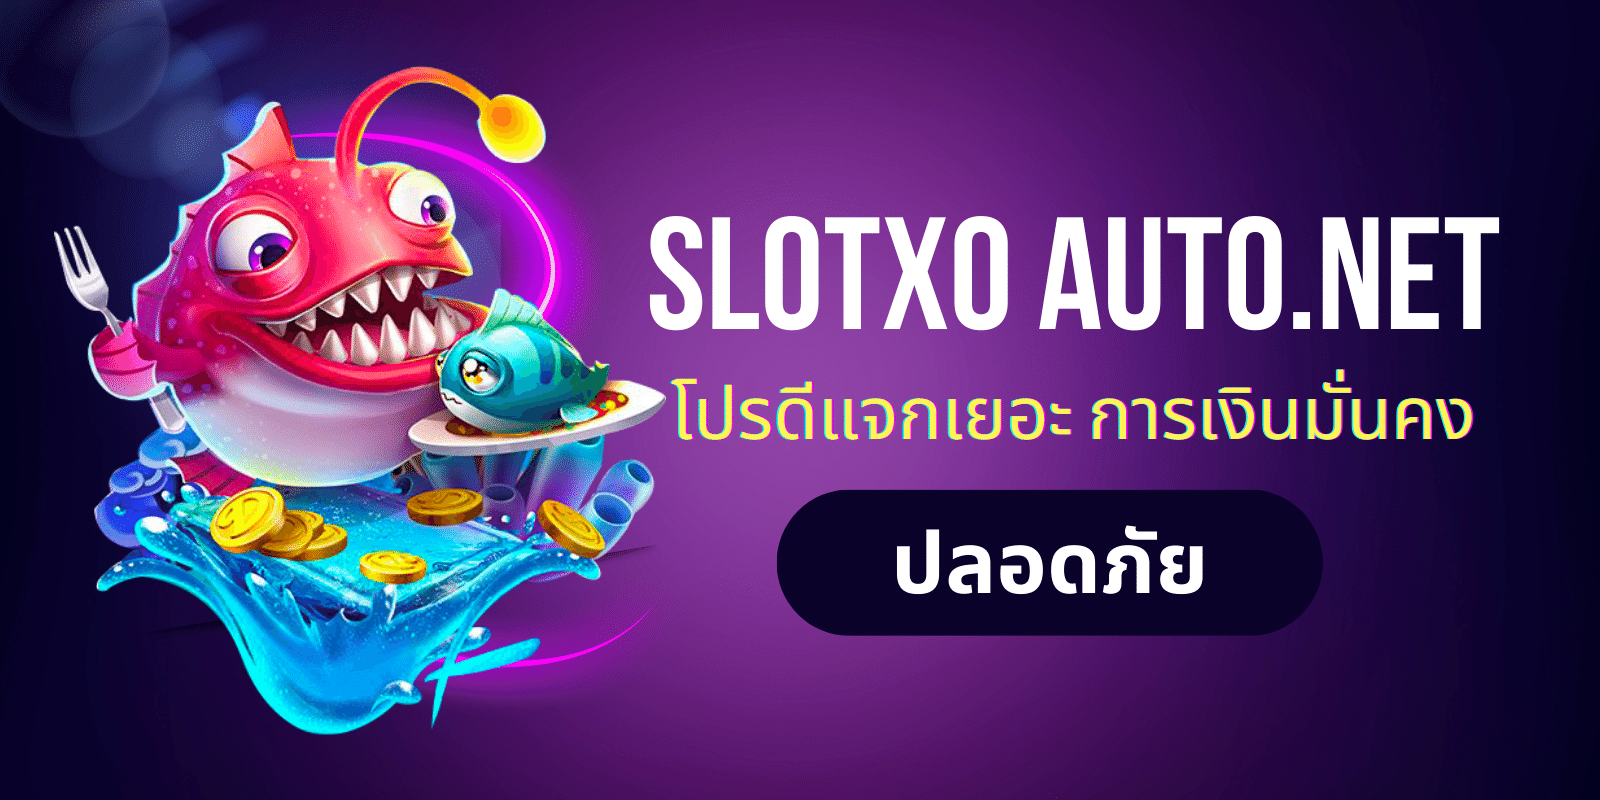 slotxo auto.net โปรดีแจกเยอะ การเงินมั่นคง ปลอดภัย